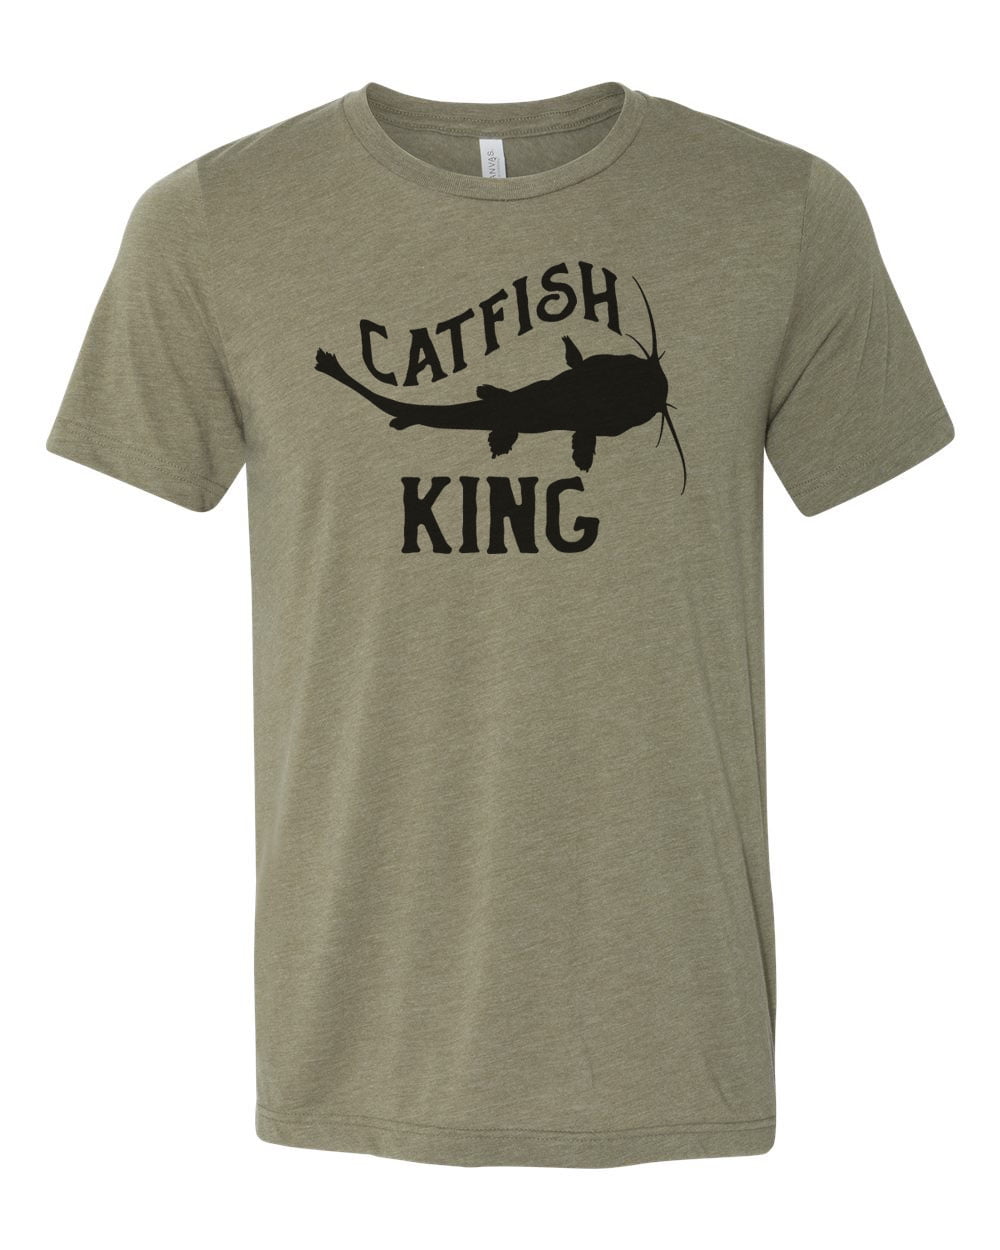 Cat Fishing Shirt, Catfish King, Noodling Shirt, Gift For Fisherman, Fishing  Shirt, Unisex Fit, Fishing Gift, Catfish Shirt, Father's Day, Heather  Olive, LARGE 